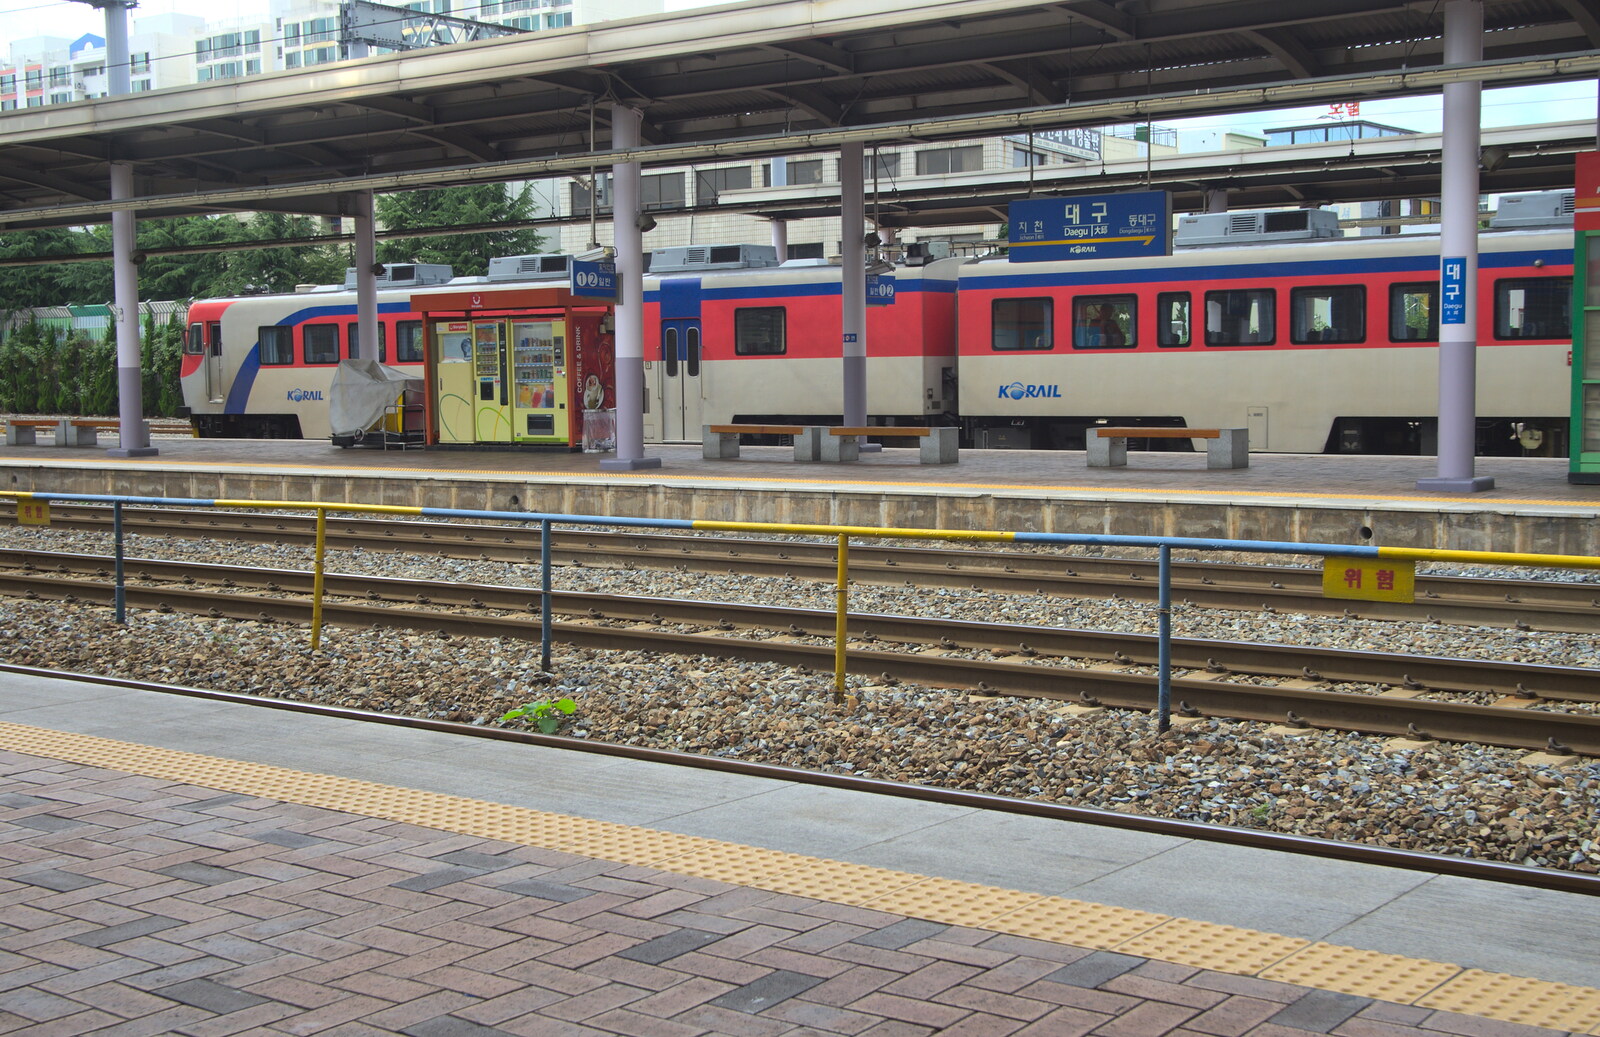 A suburban K-Rail train from Seomun Market, Daegu, South Korea - 1st July 2012